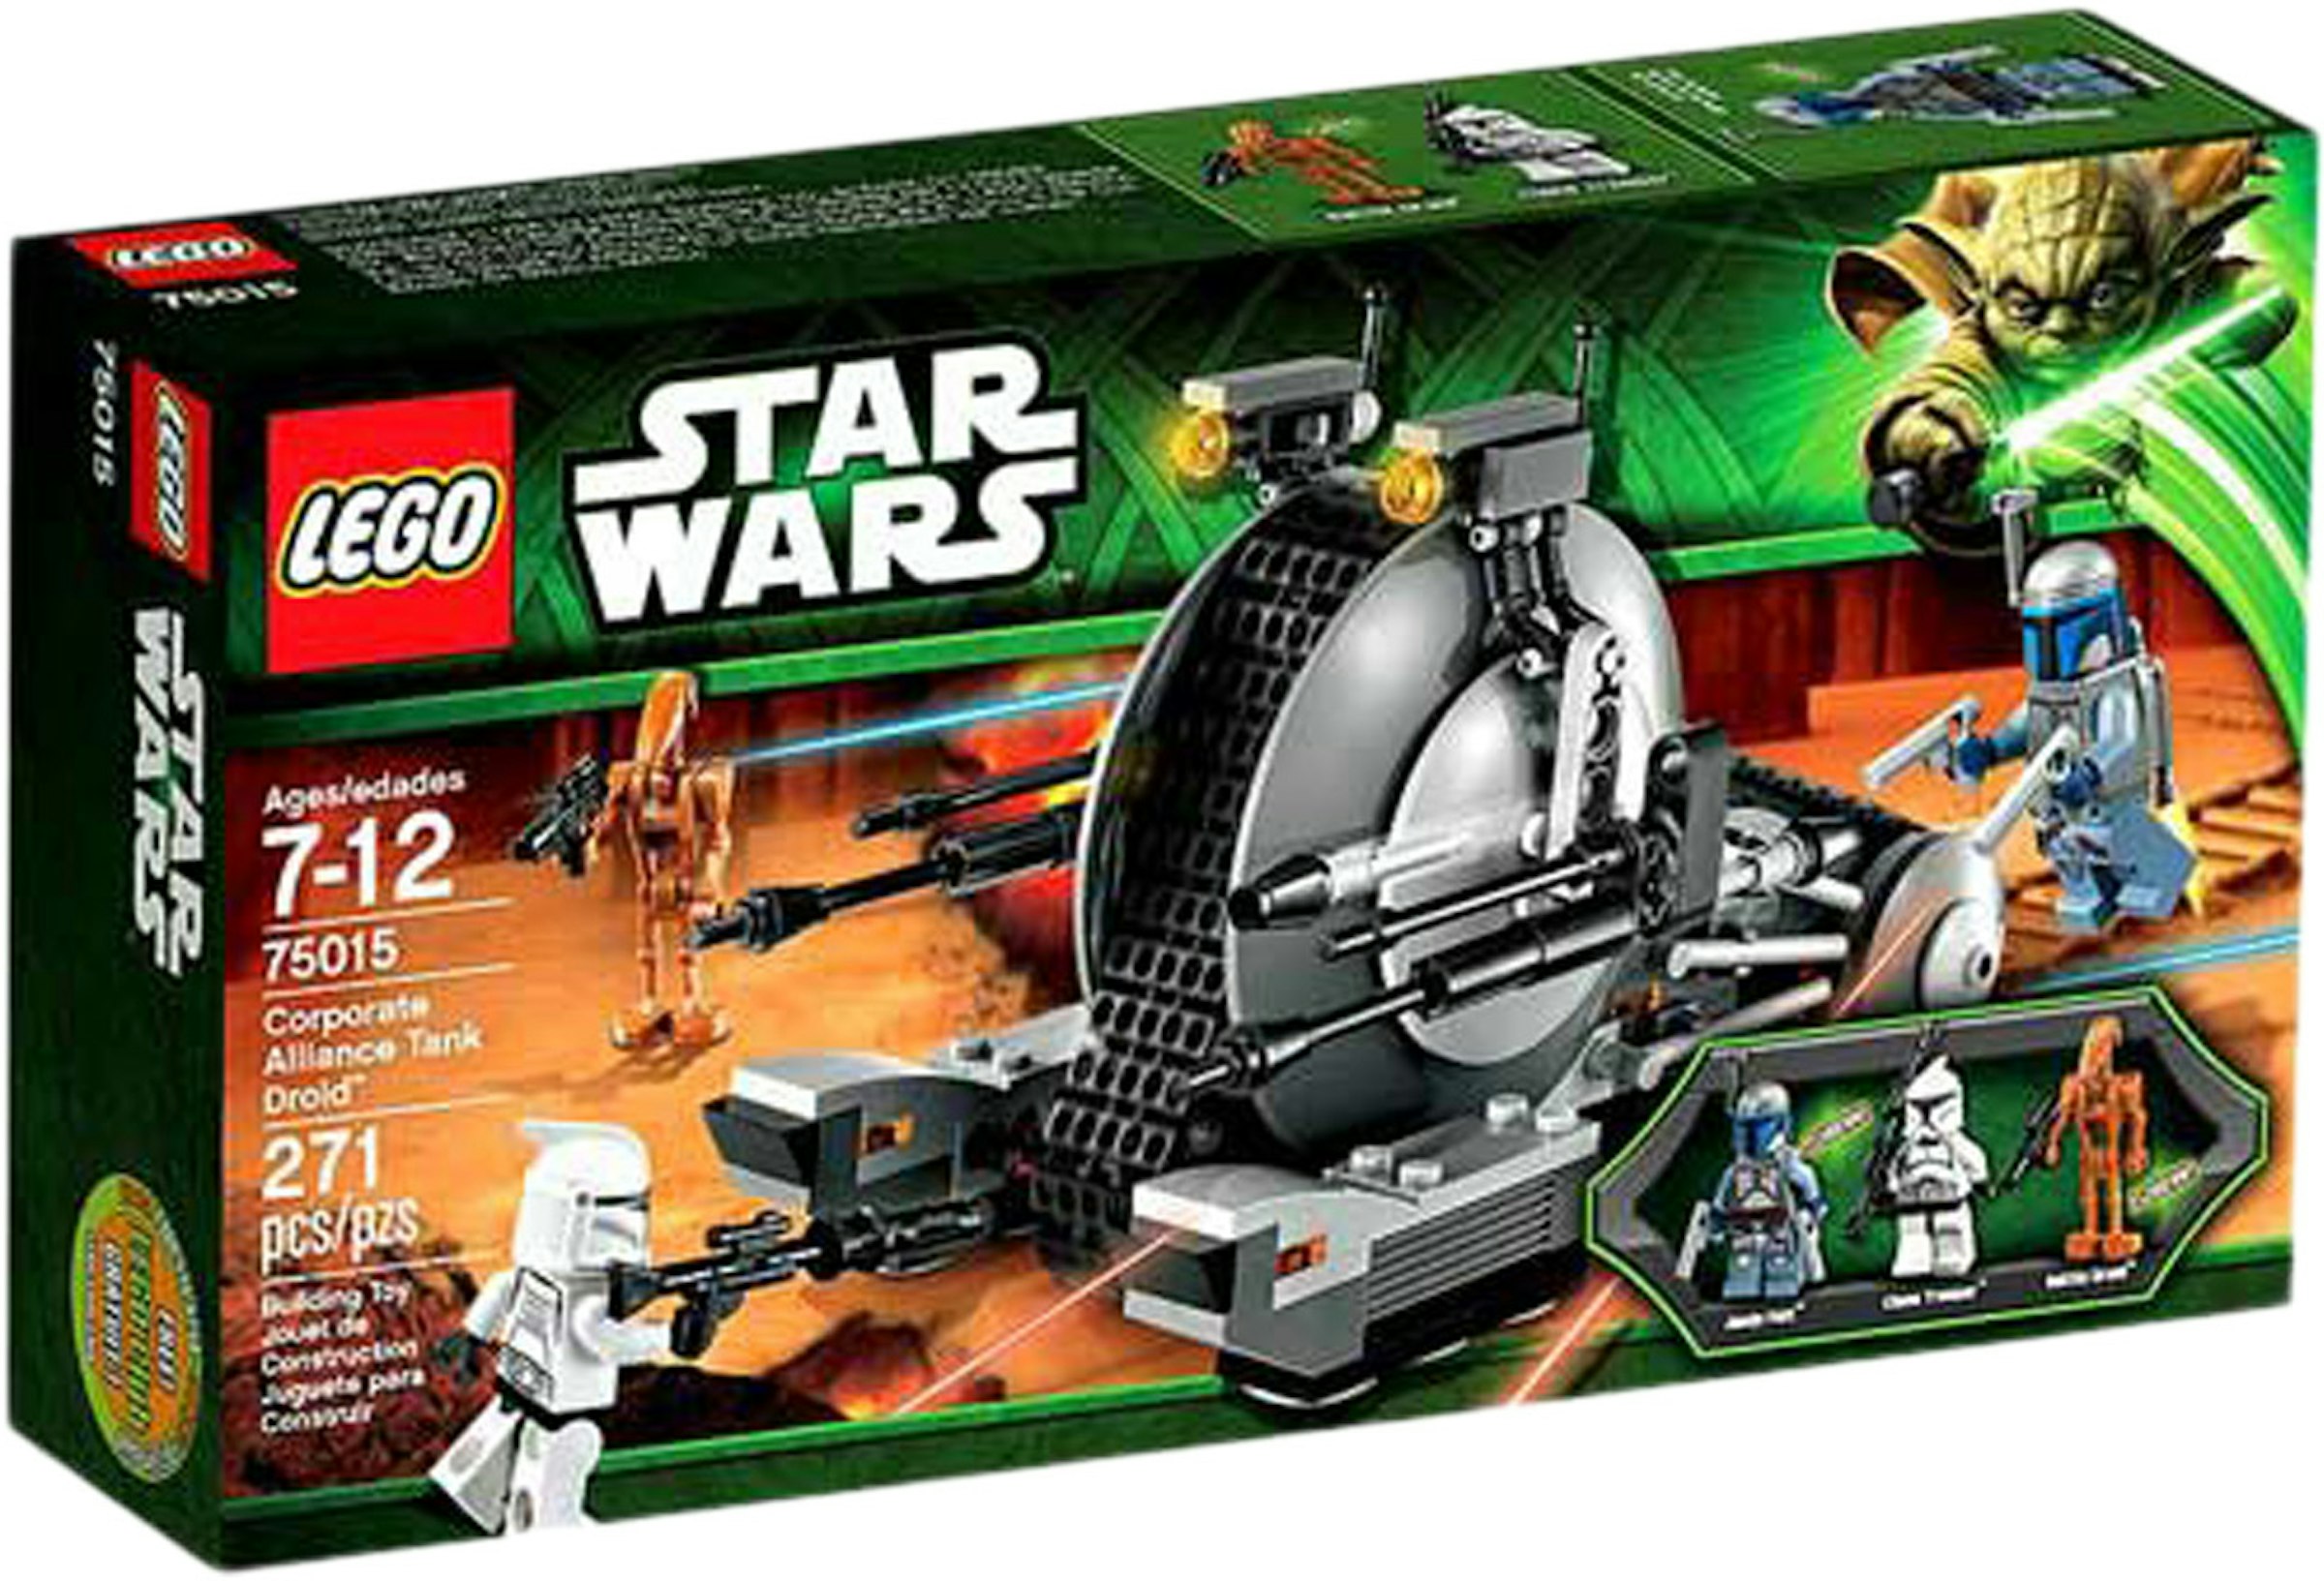 LEGO Star Wars The Clone Wars Corporate Alliance Tank Droid - US